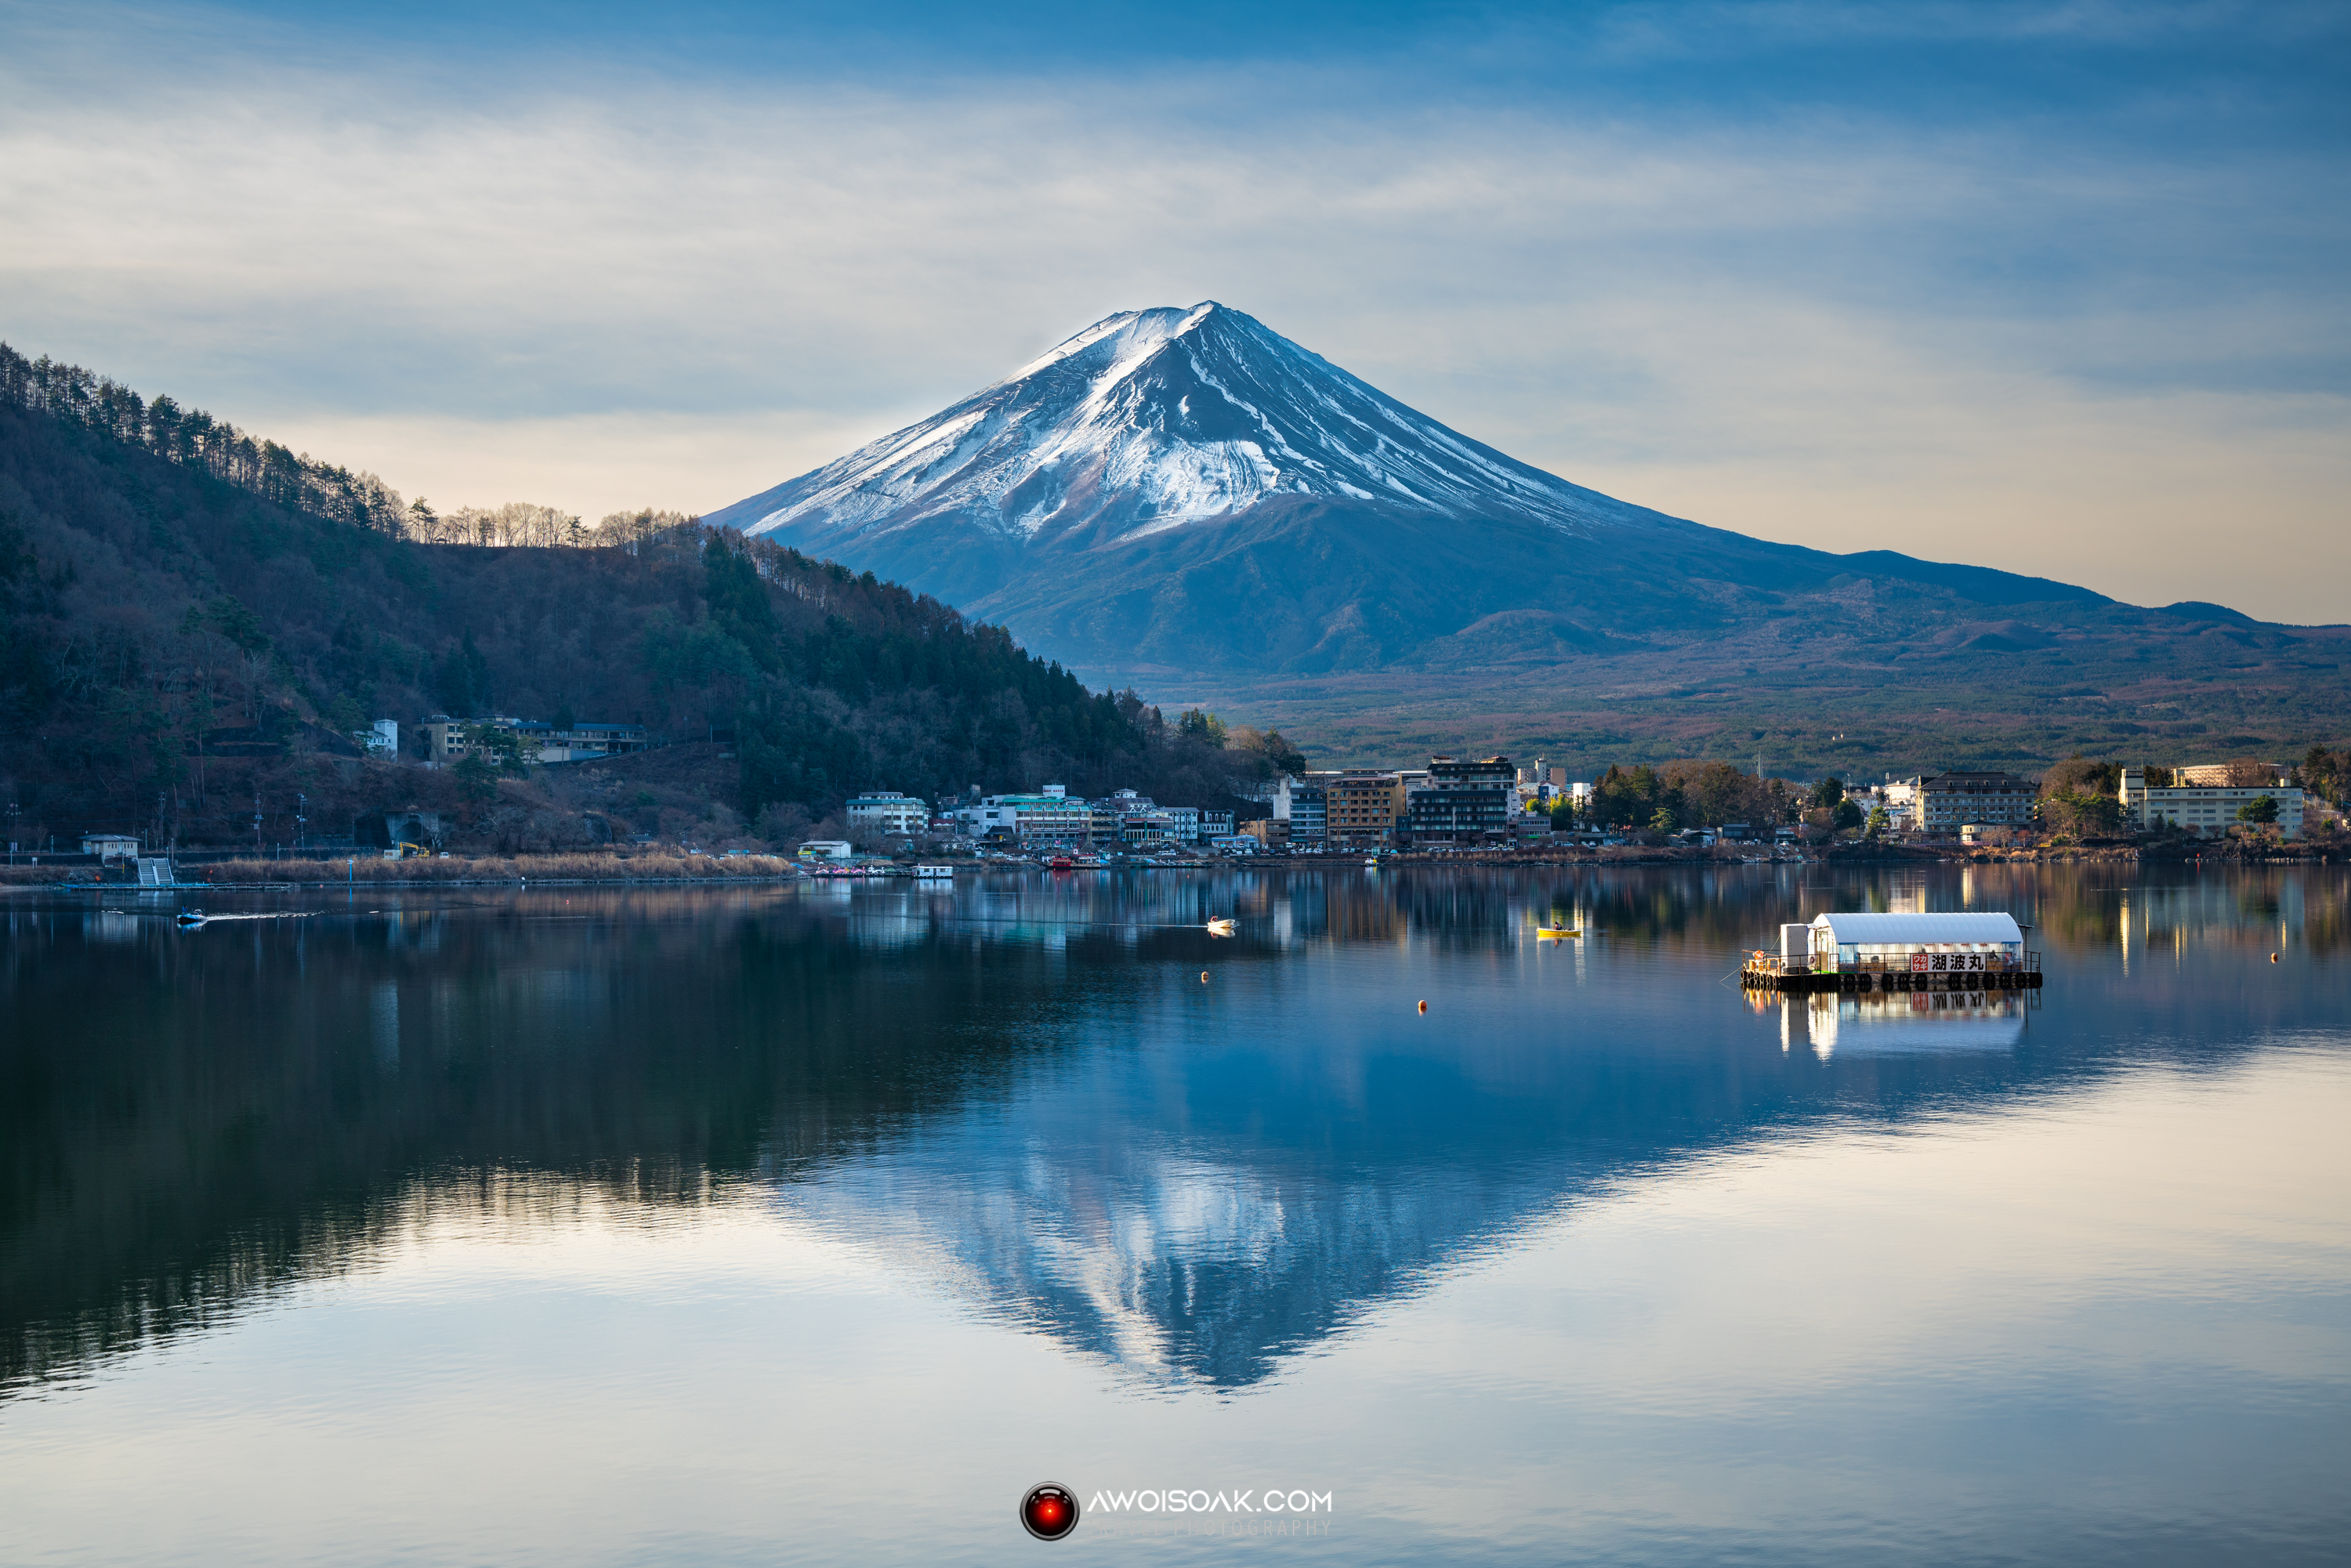 Mount Fuji from Lake Kawaguchi